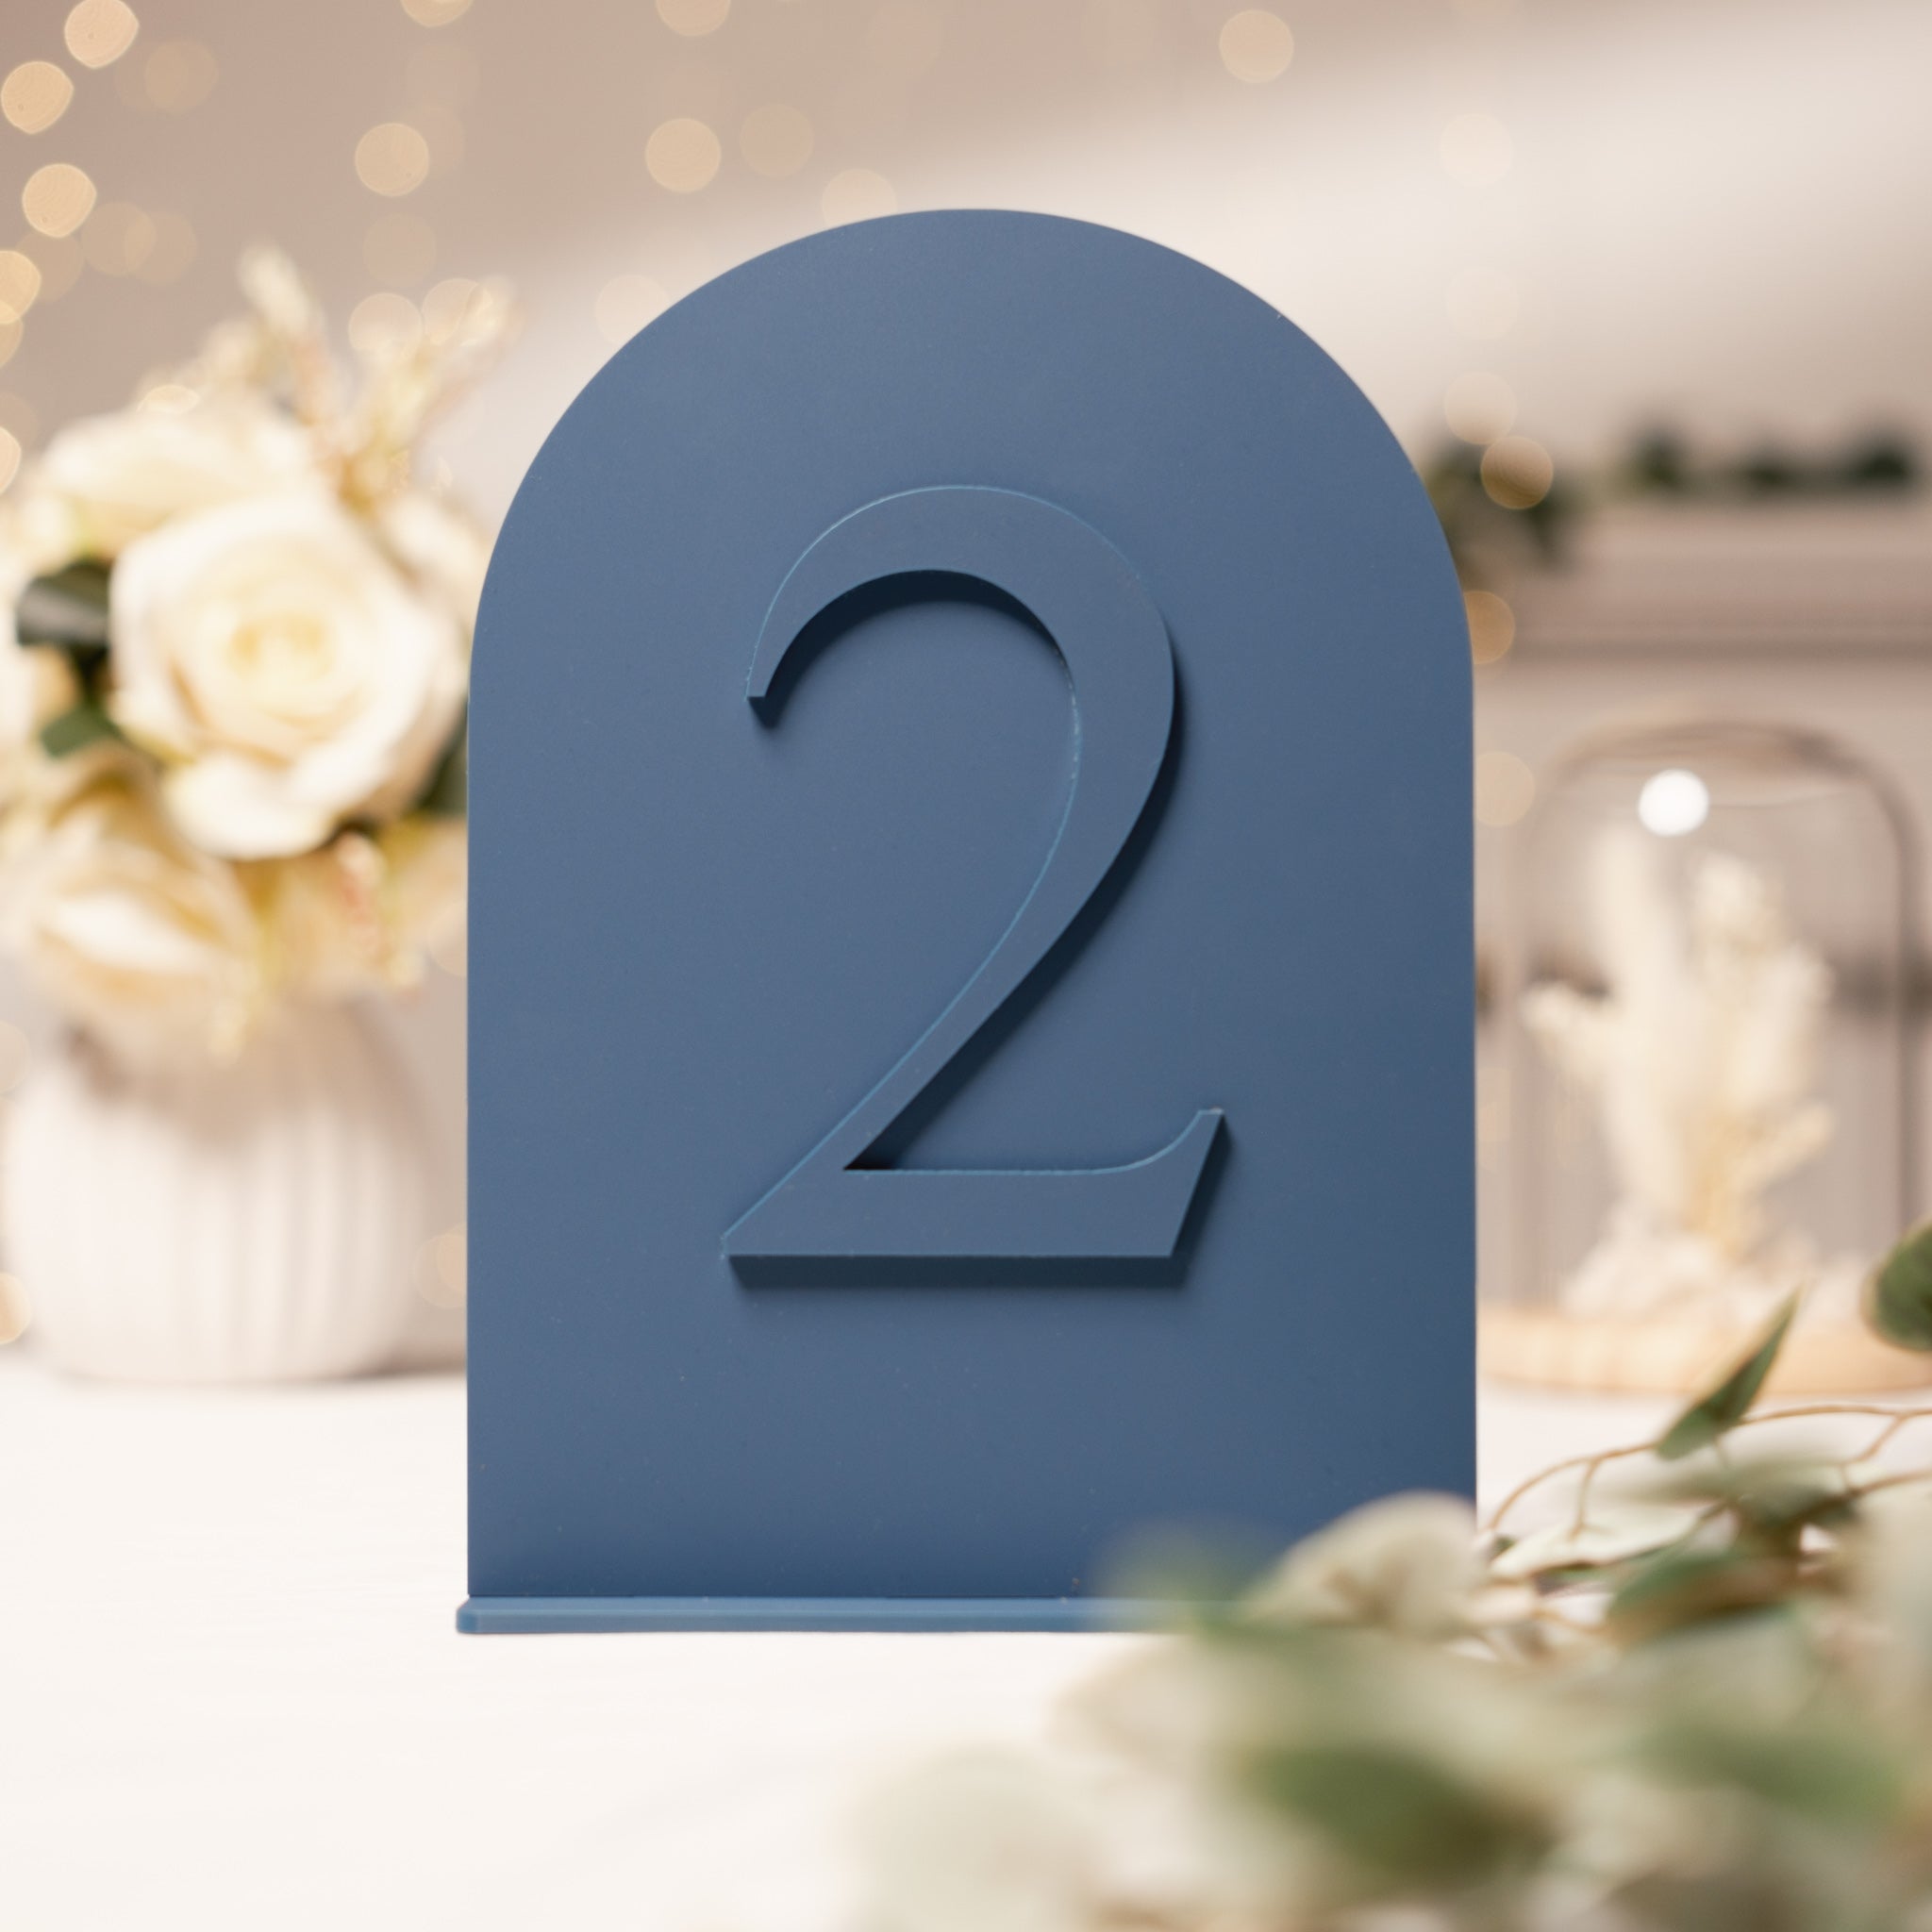 Wedding table numbers